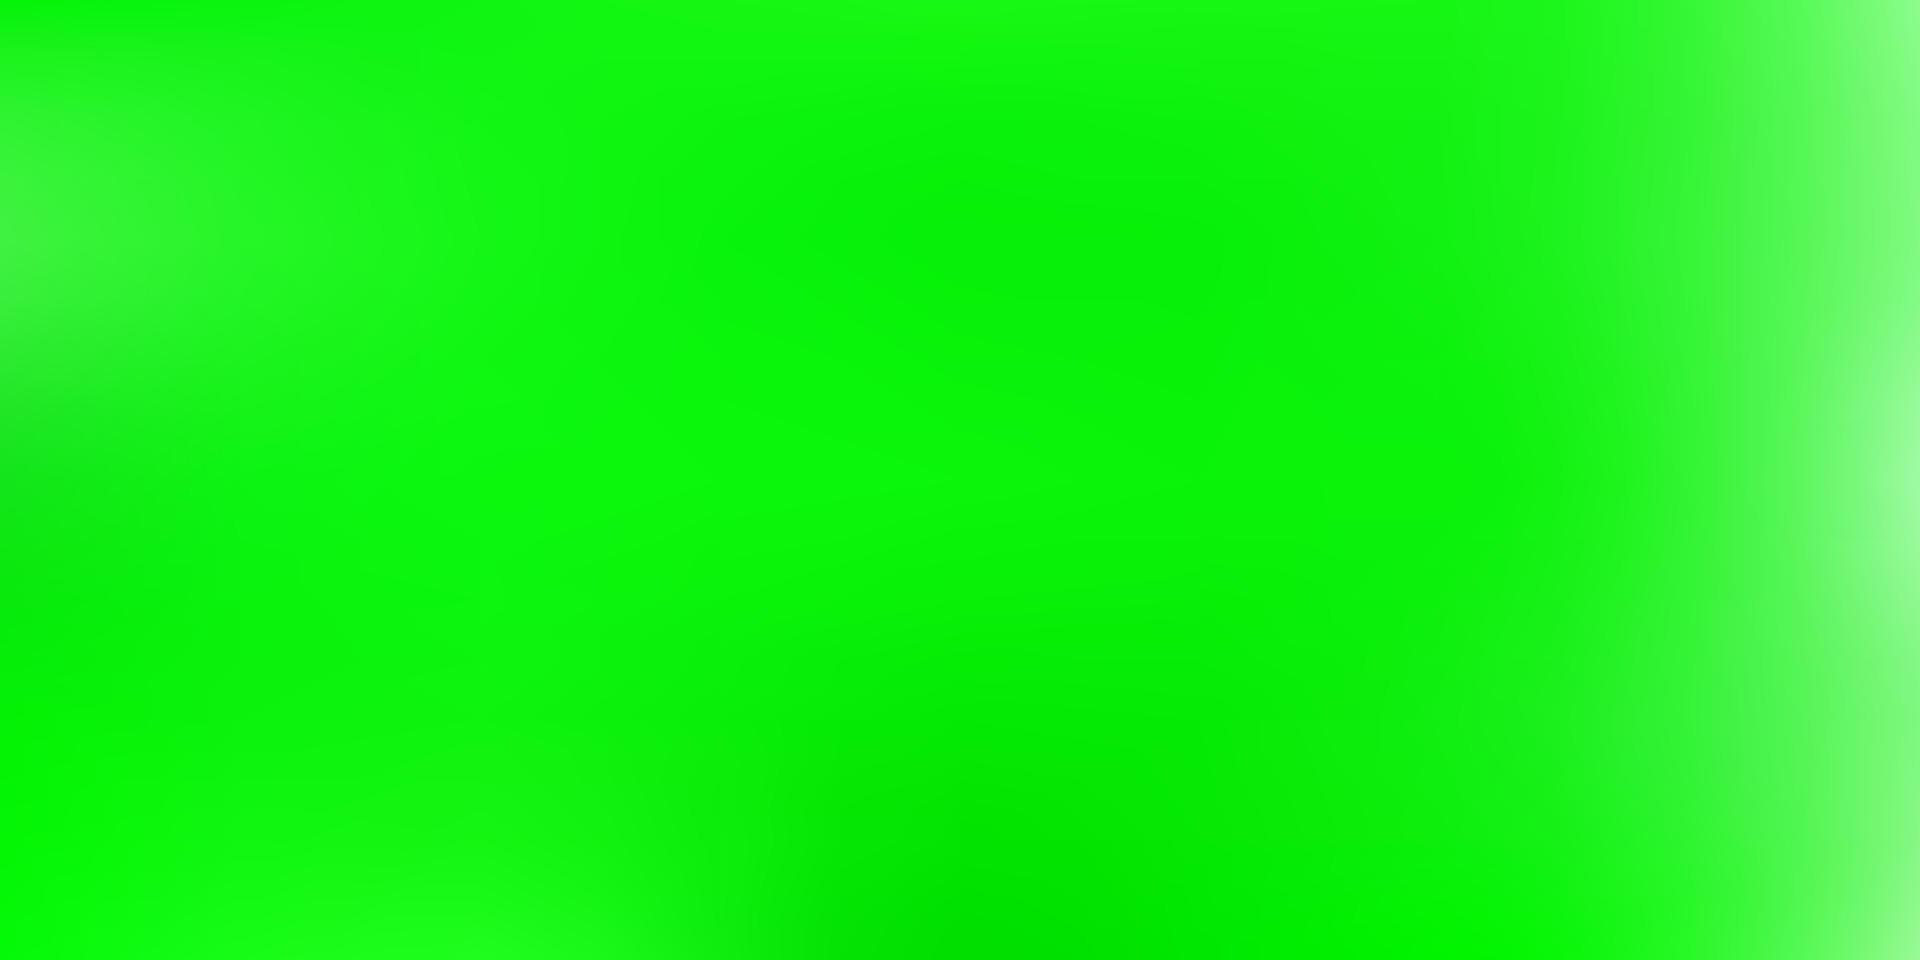 Light green vector blurred backdrop.